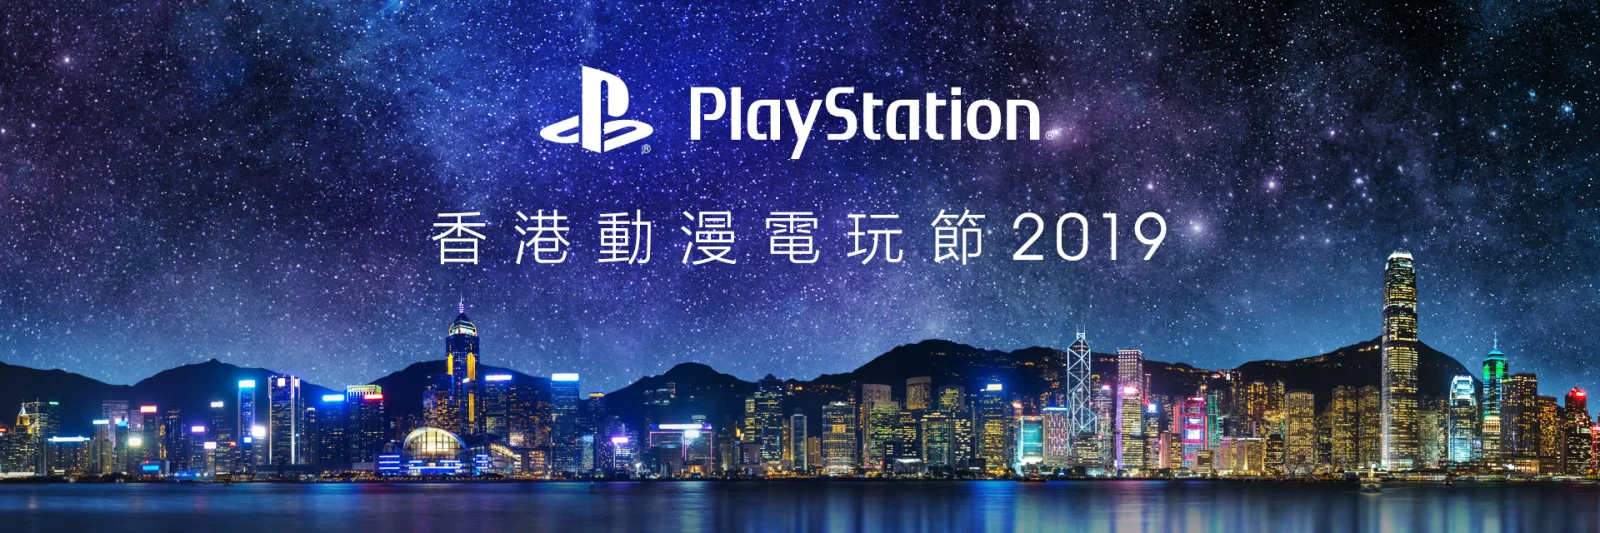 Playstation公布2019香港ACG展参展详情